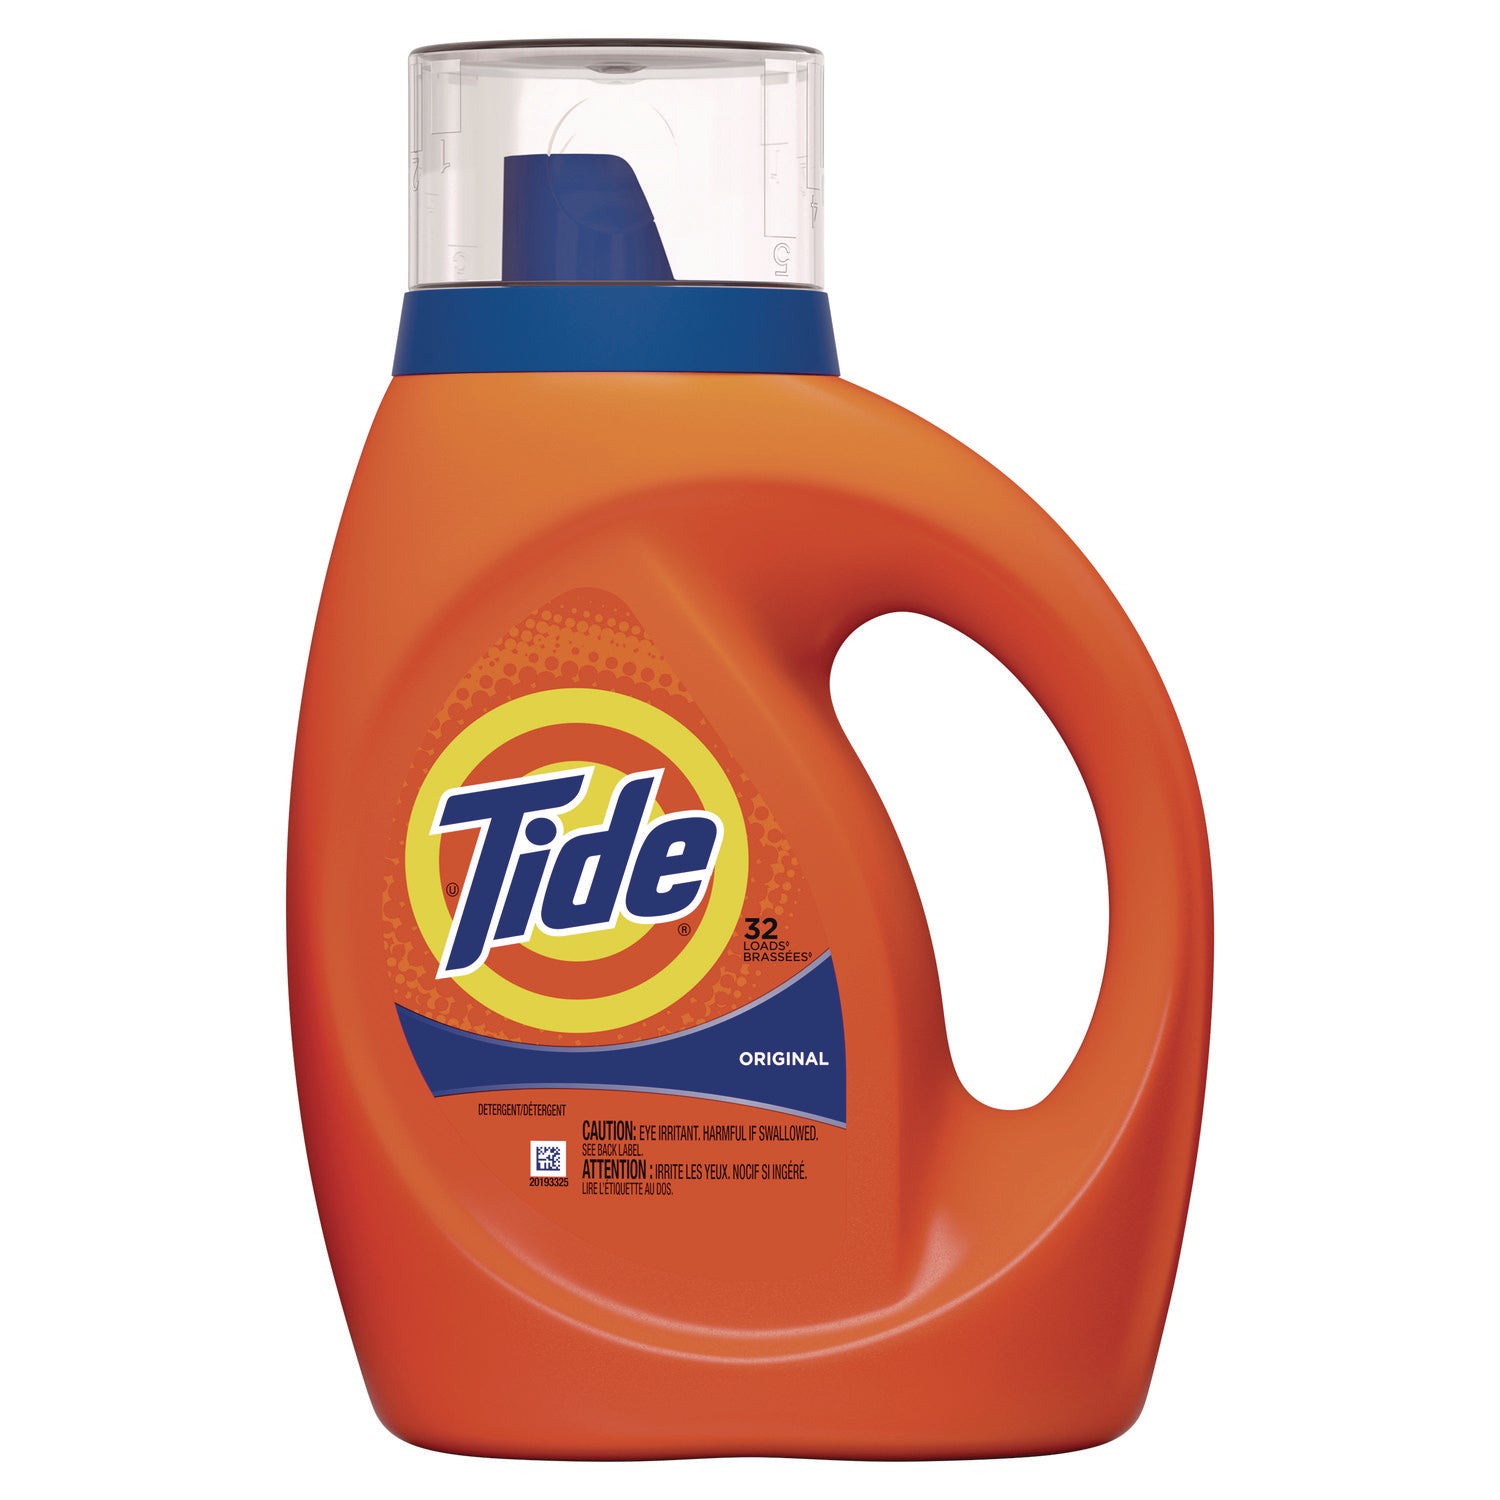 liquid-tide-laundry-detergent-32-loads-42-oz_pgc12117ea - 1